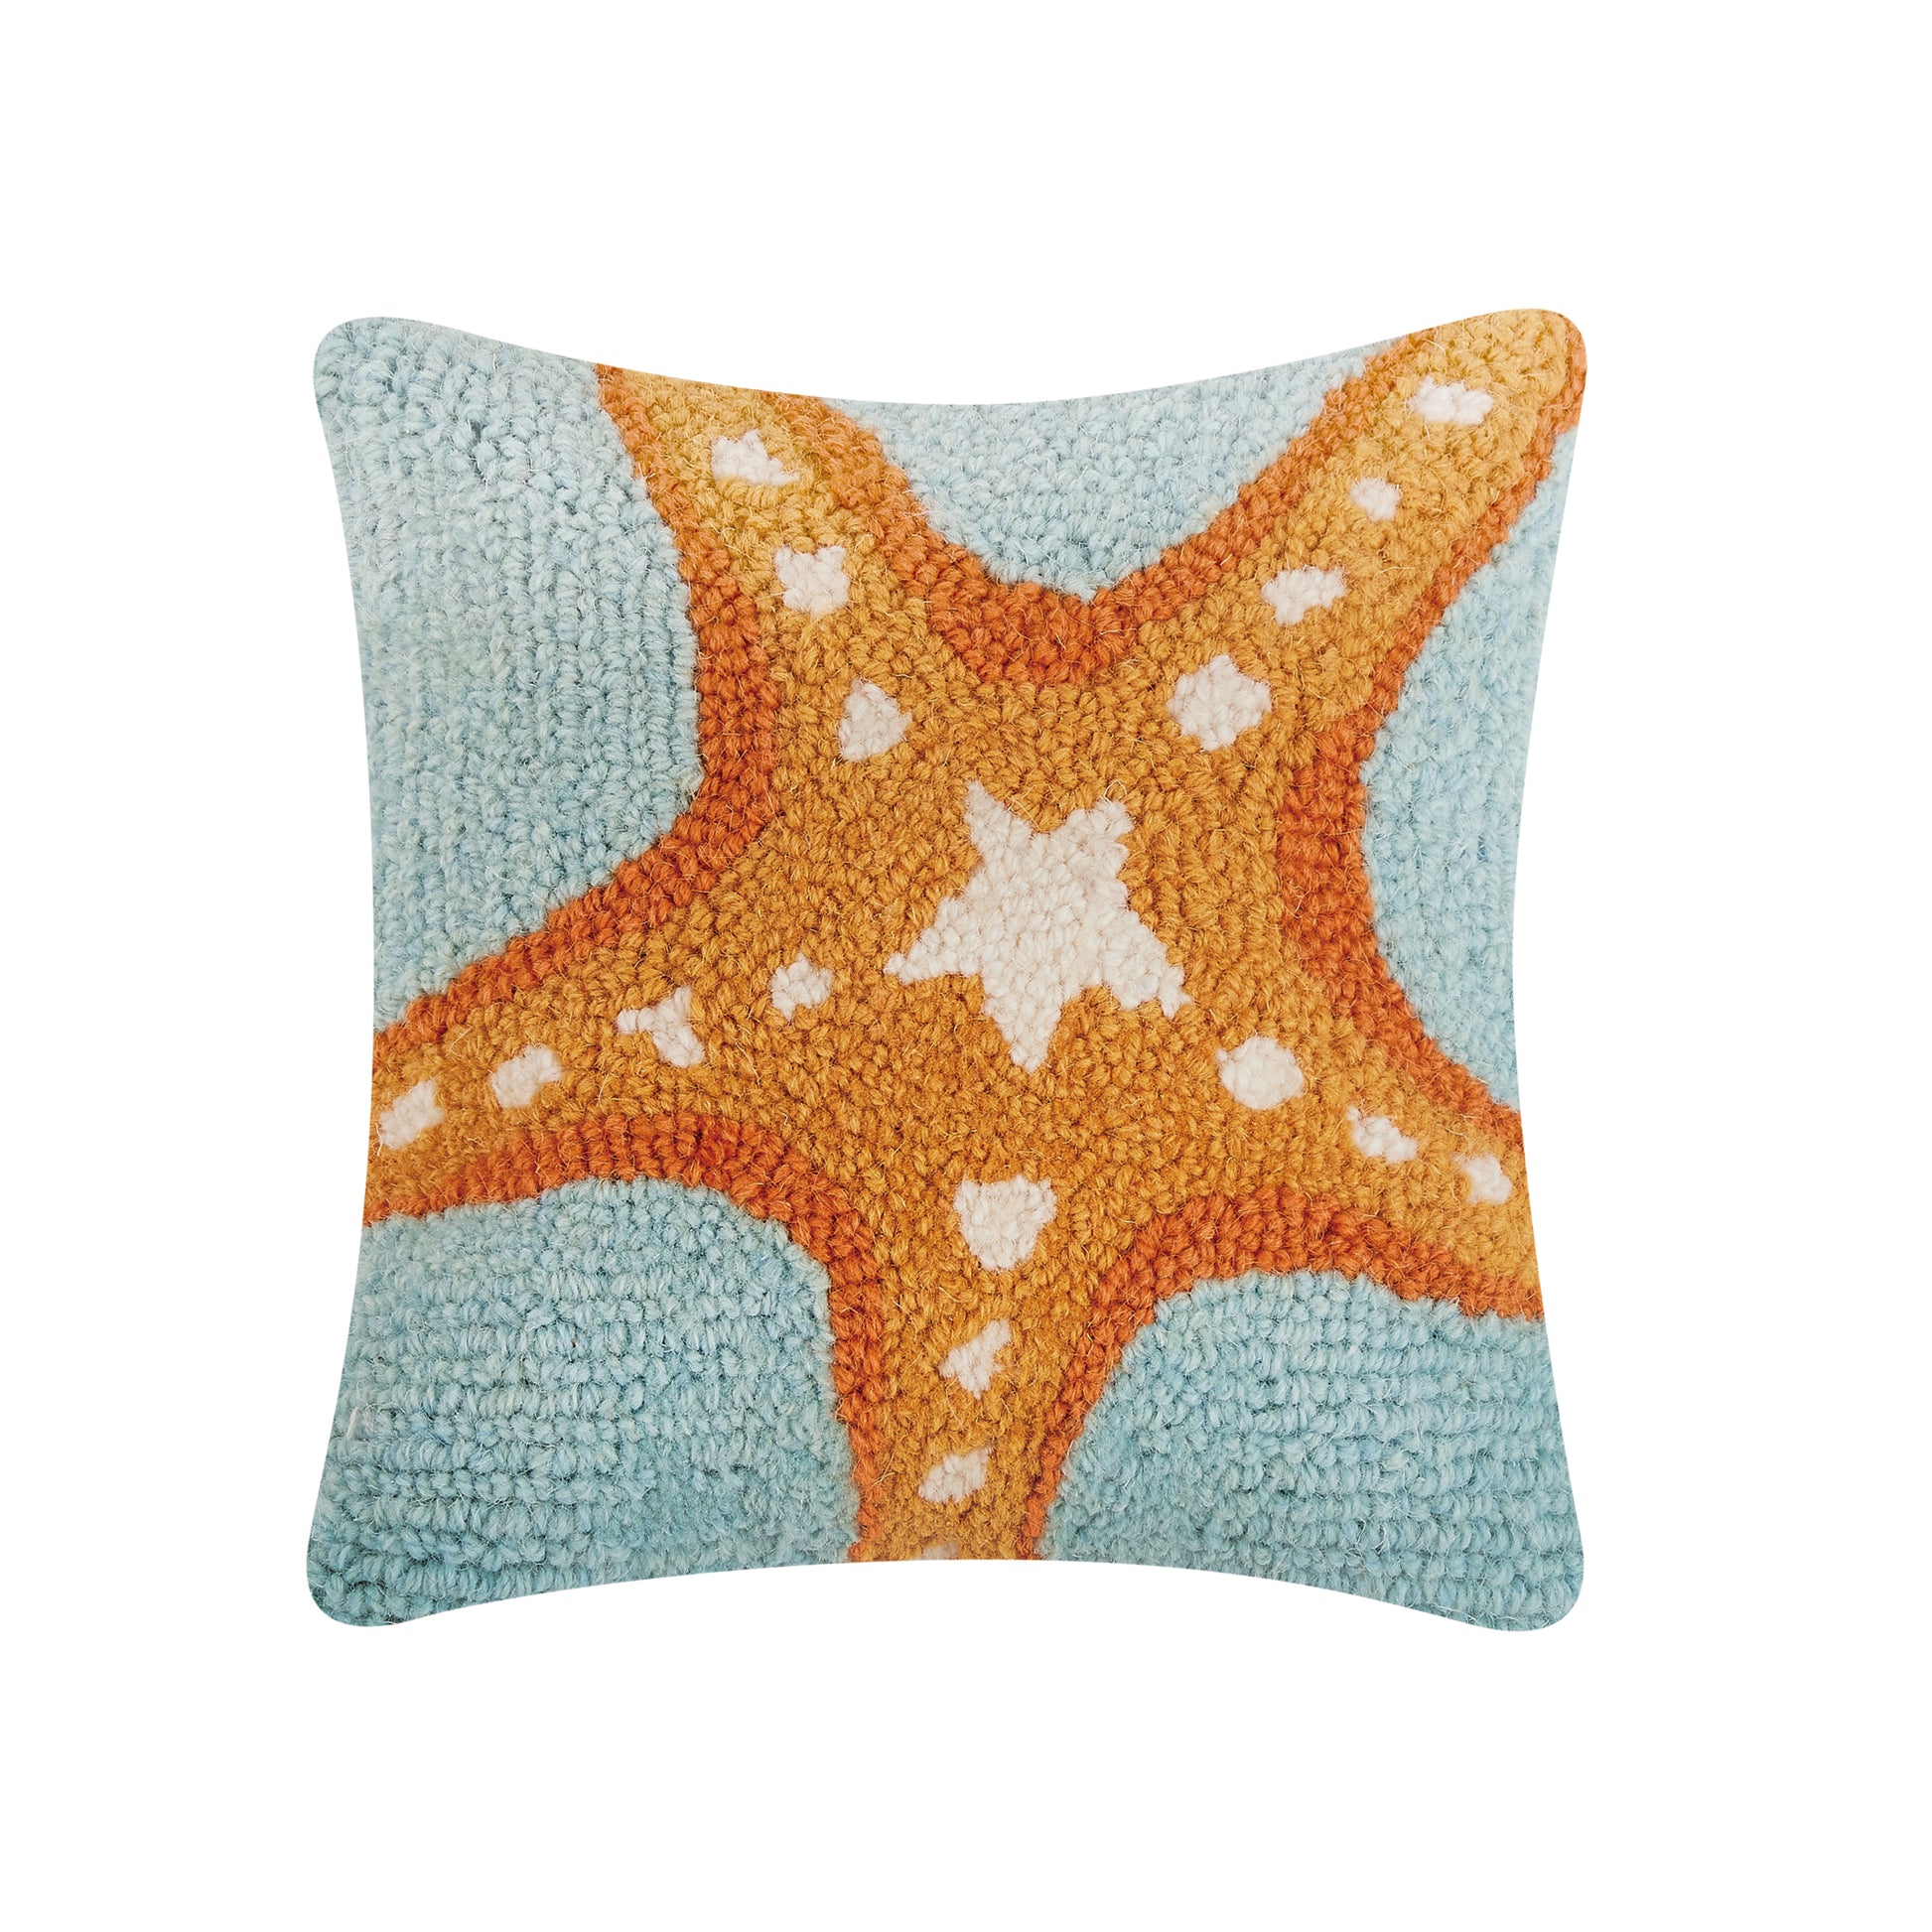 Starfish Hook Pillow - Stocklist Goods & Gifts